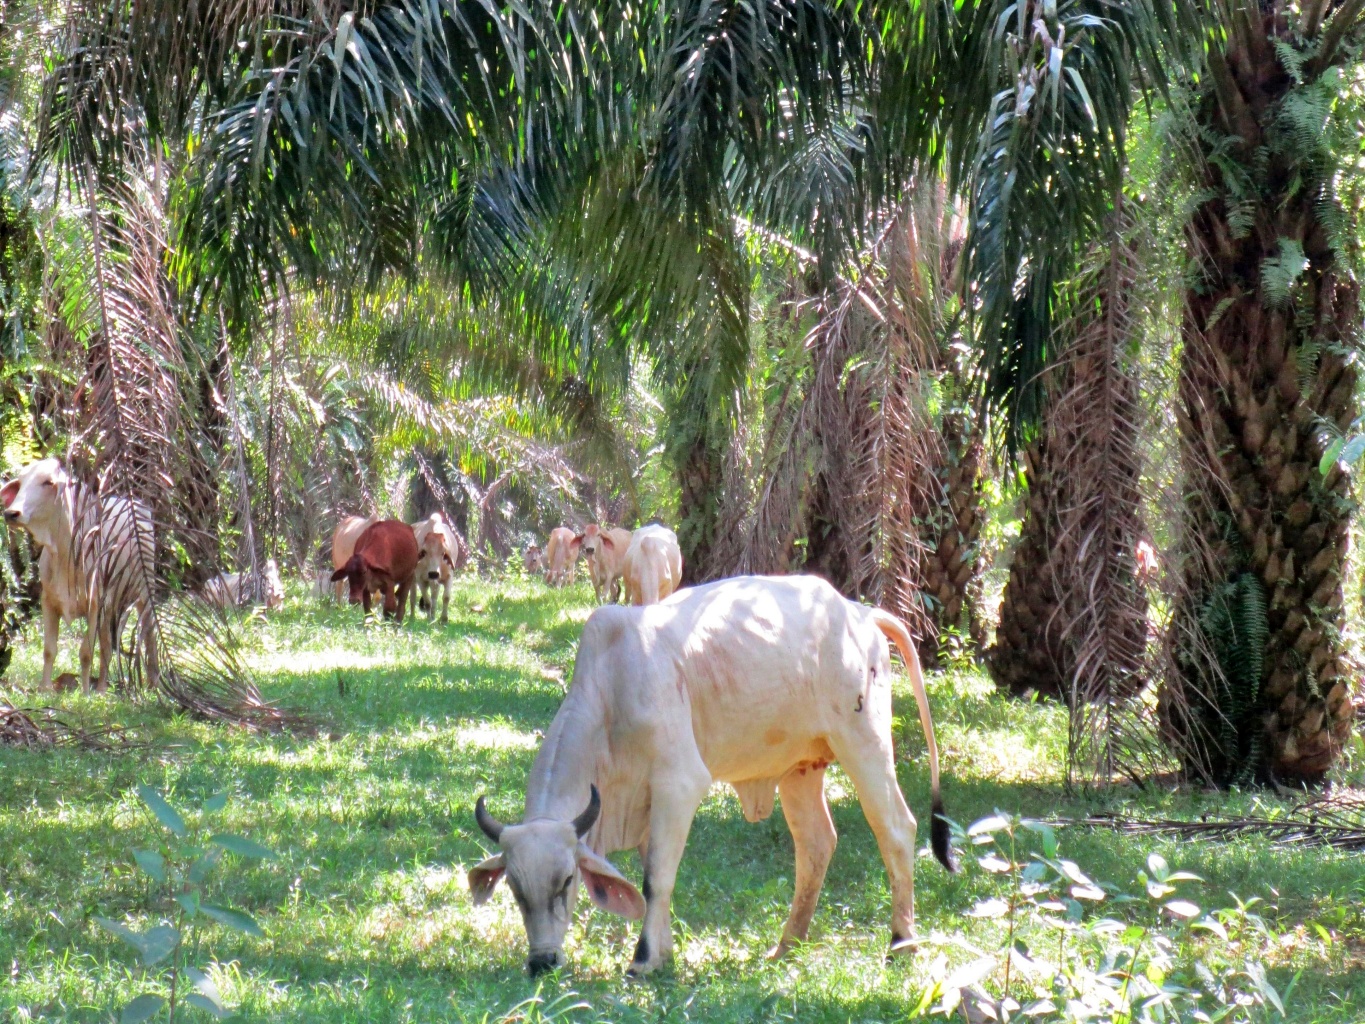 Cattle grazing in an oilpalm plantation